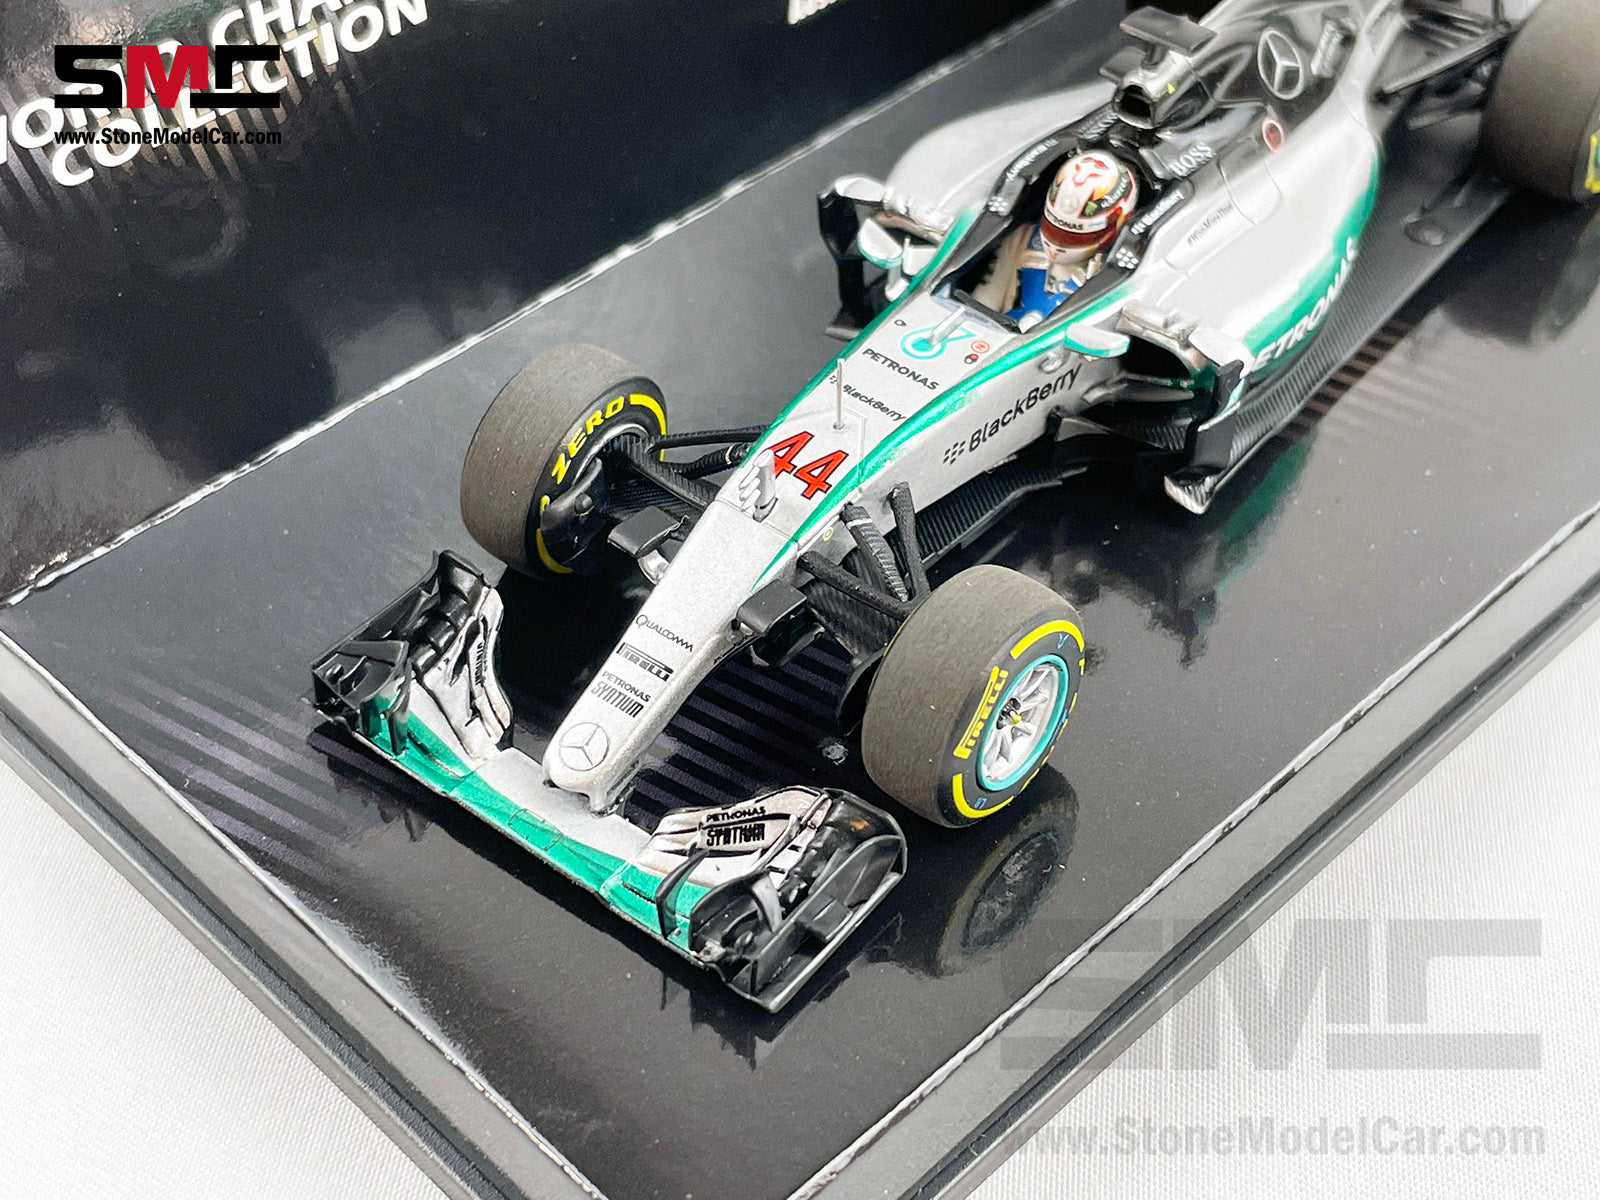 2015 3x World Champion Mercedes AMG F1 W06 #44 Lewis Hamilton US 